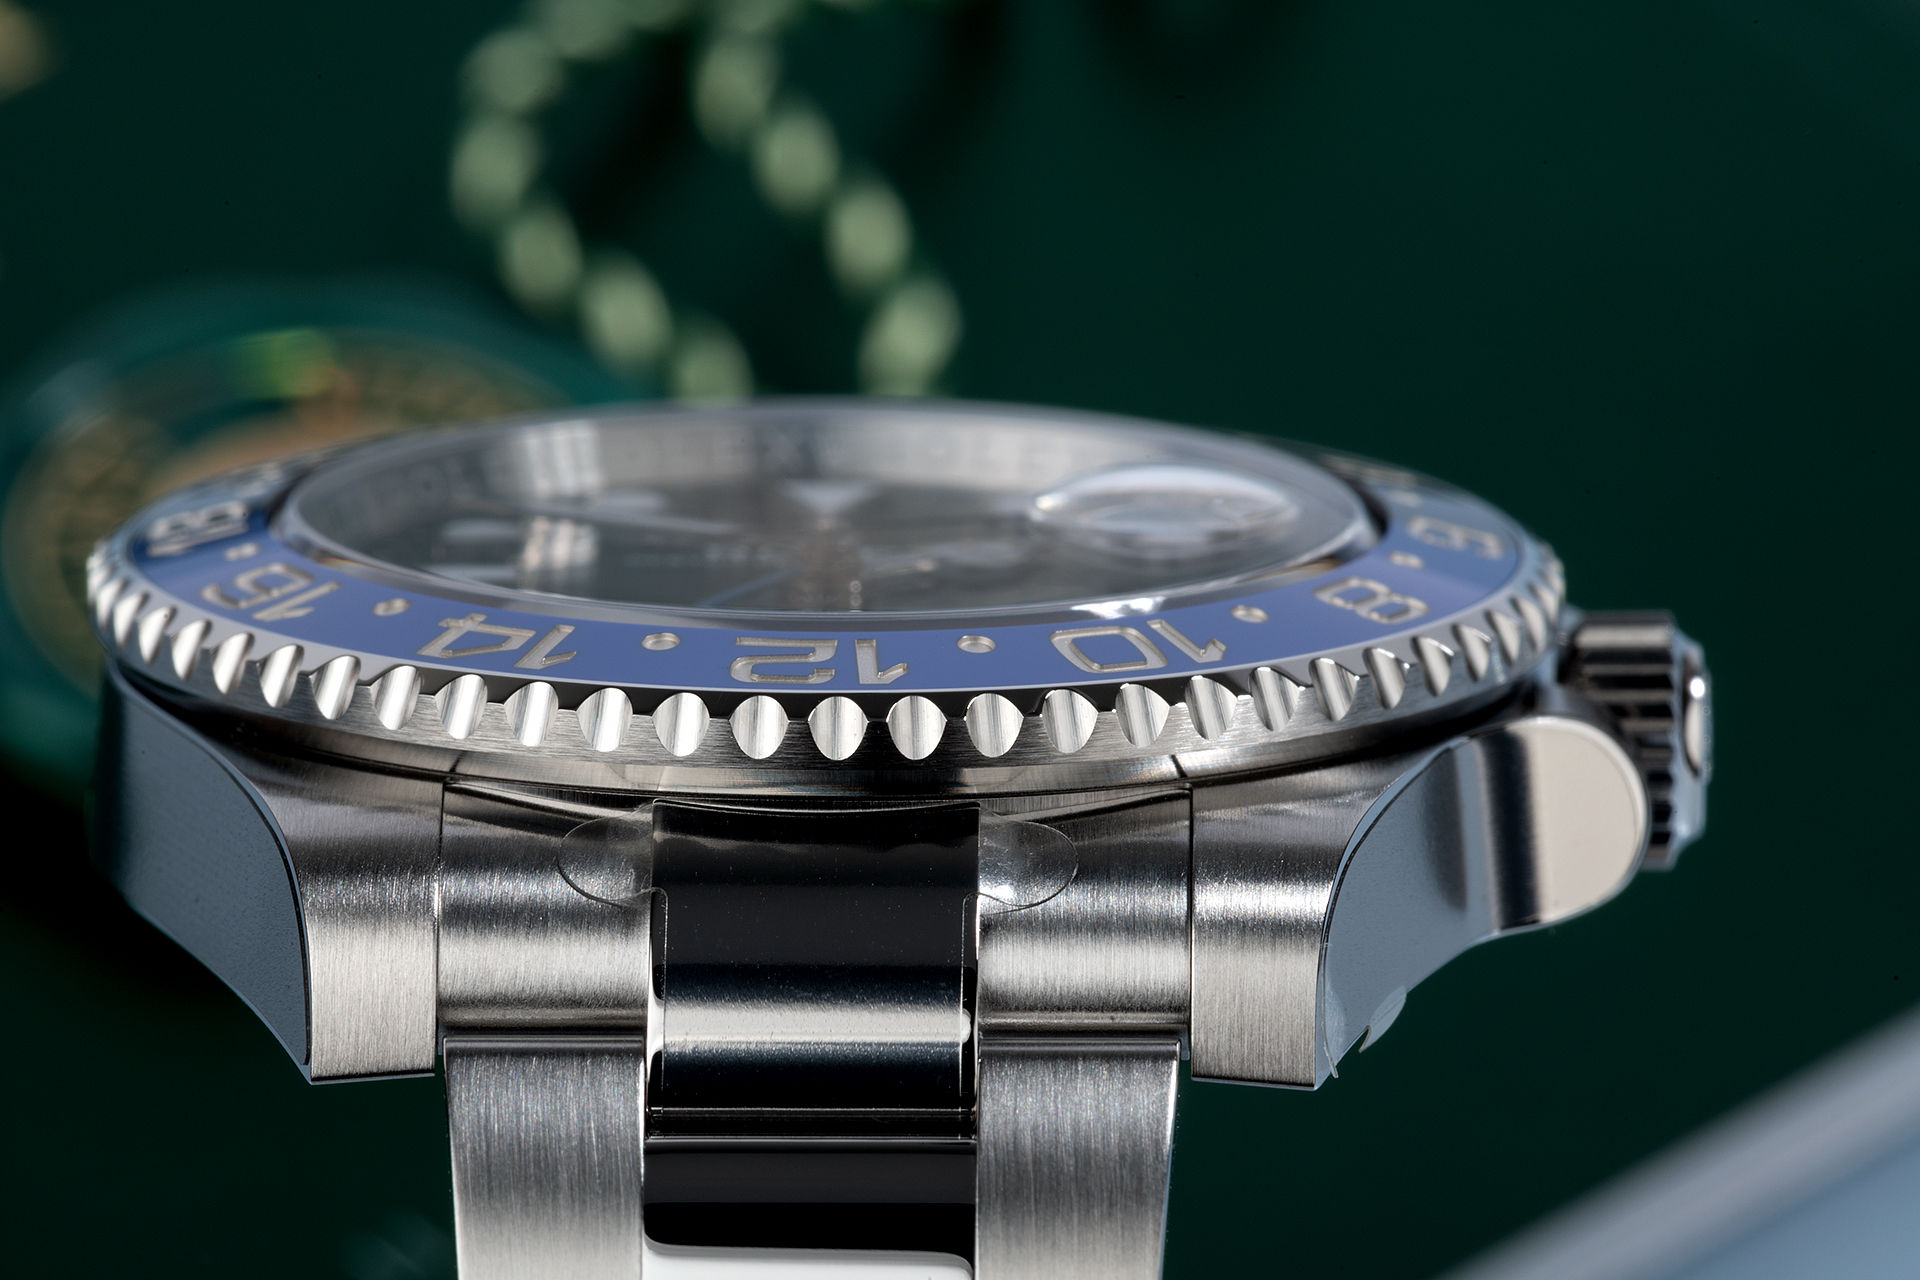 ref 116710BLNR | 5 Year Warranty 'Fully Stickered' | Rolex GMT-Master II